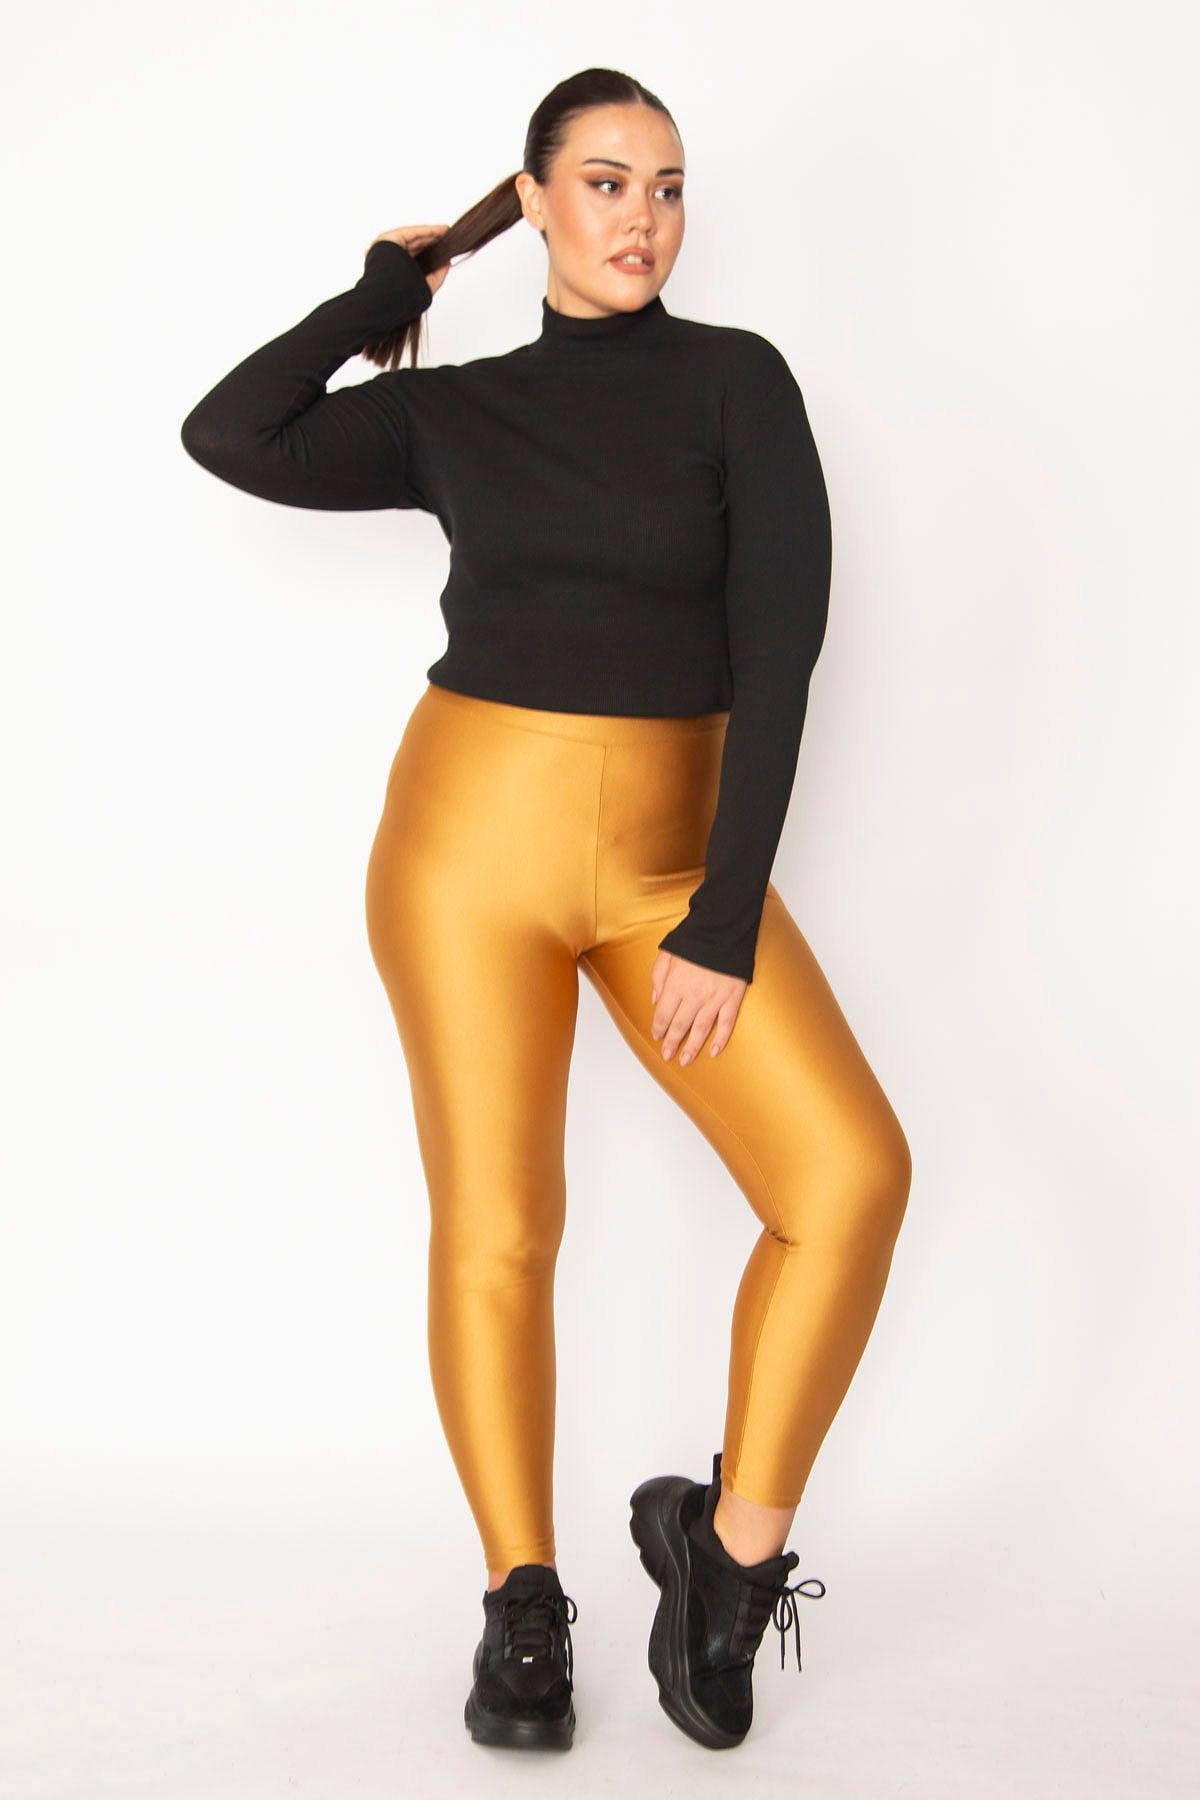 Spandex - Google 검색  Spandex outfits, Shiny pants, Disco pants